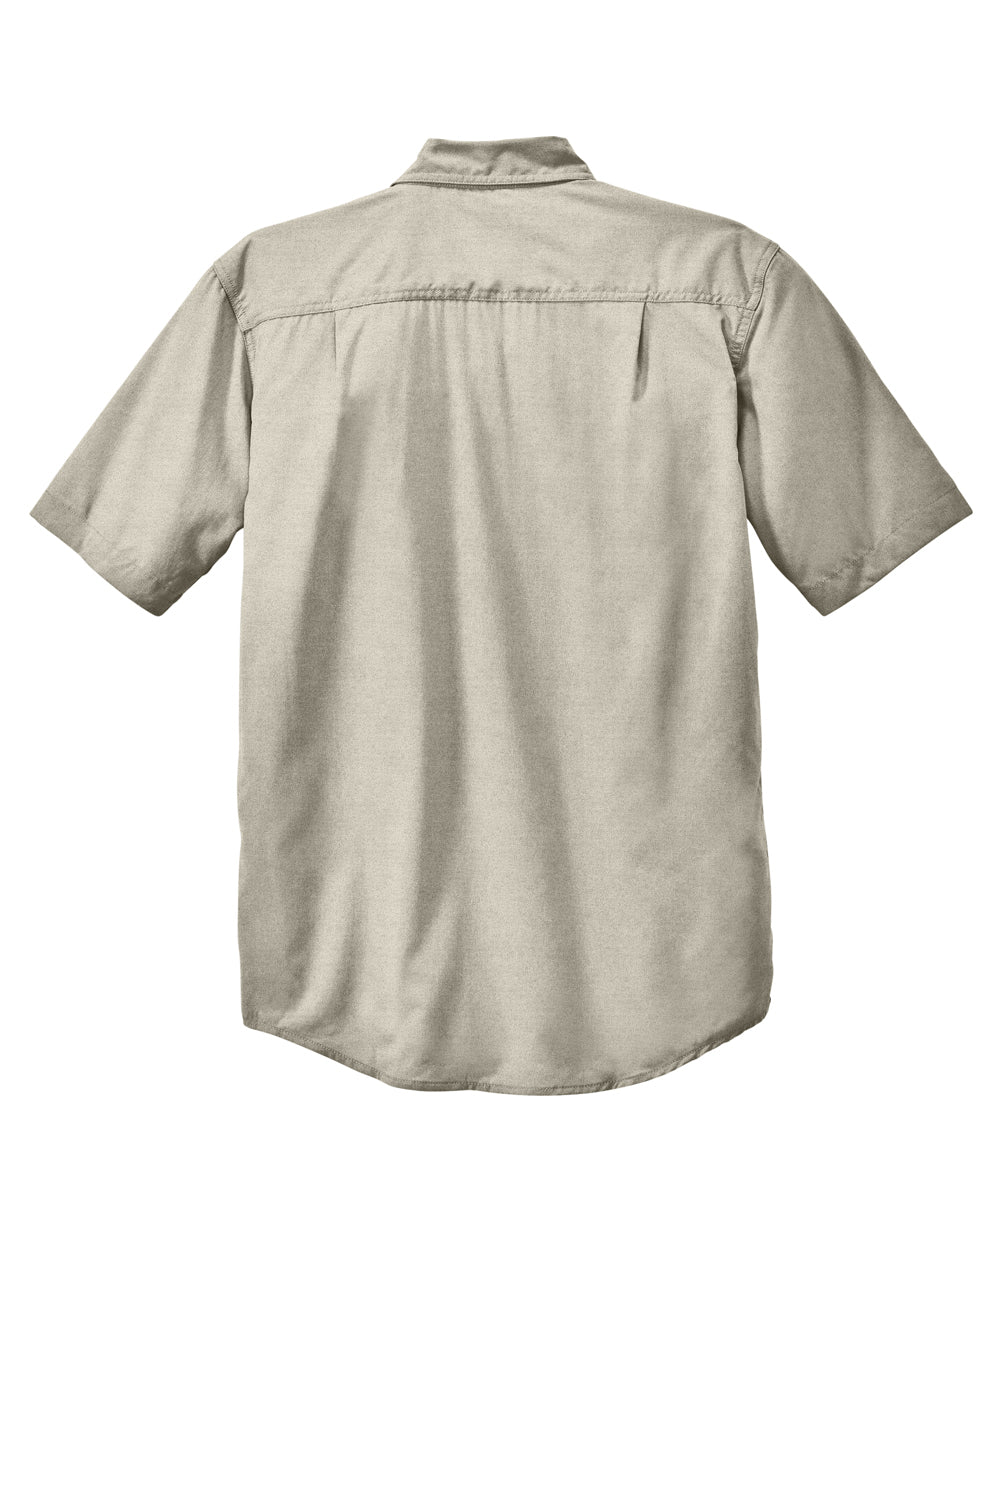 Carhartt CT105292 Mens Force Moisture Wicking Short Sleeve Button Down Shirt w/ Double Pockets Steel Grey Flat Back